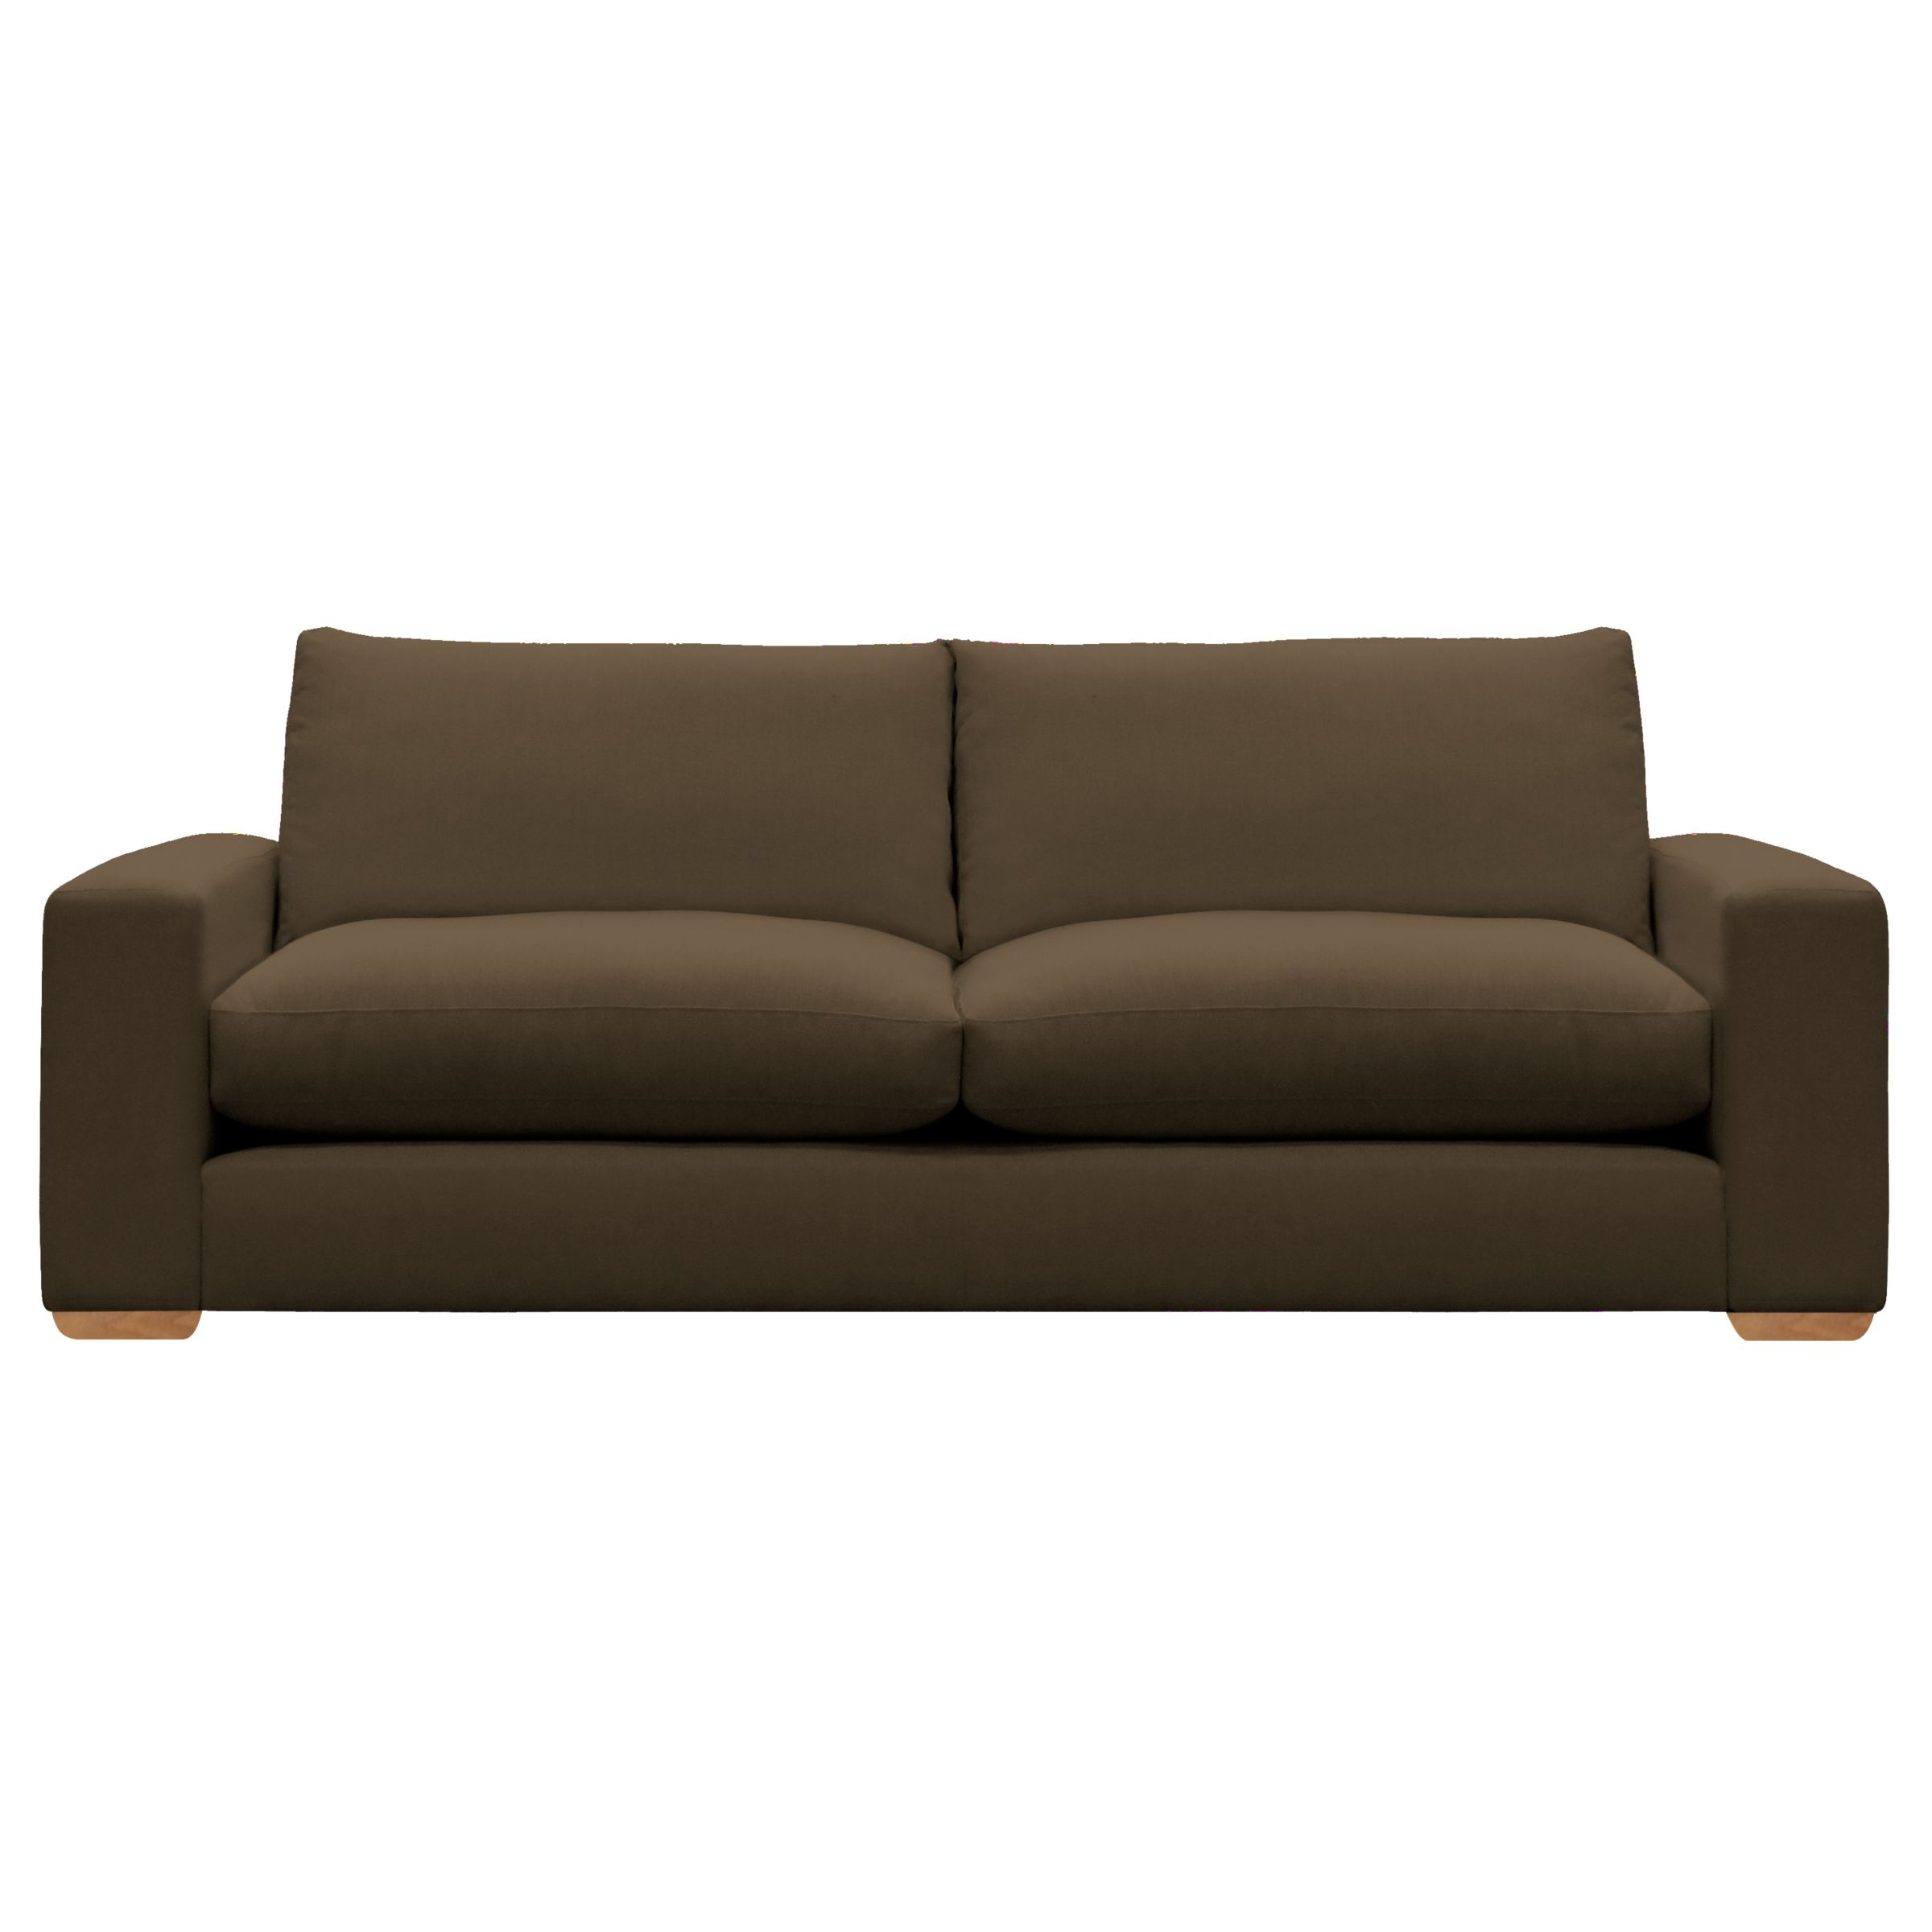 John Lewis Options Wide Arm Grand Sofa, Eaton Chocolate, width 225cm